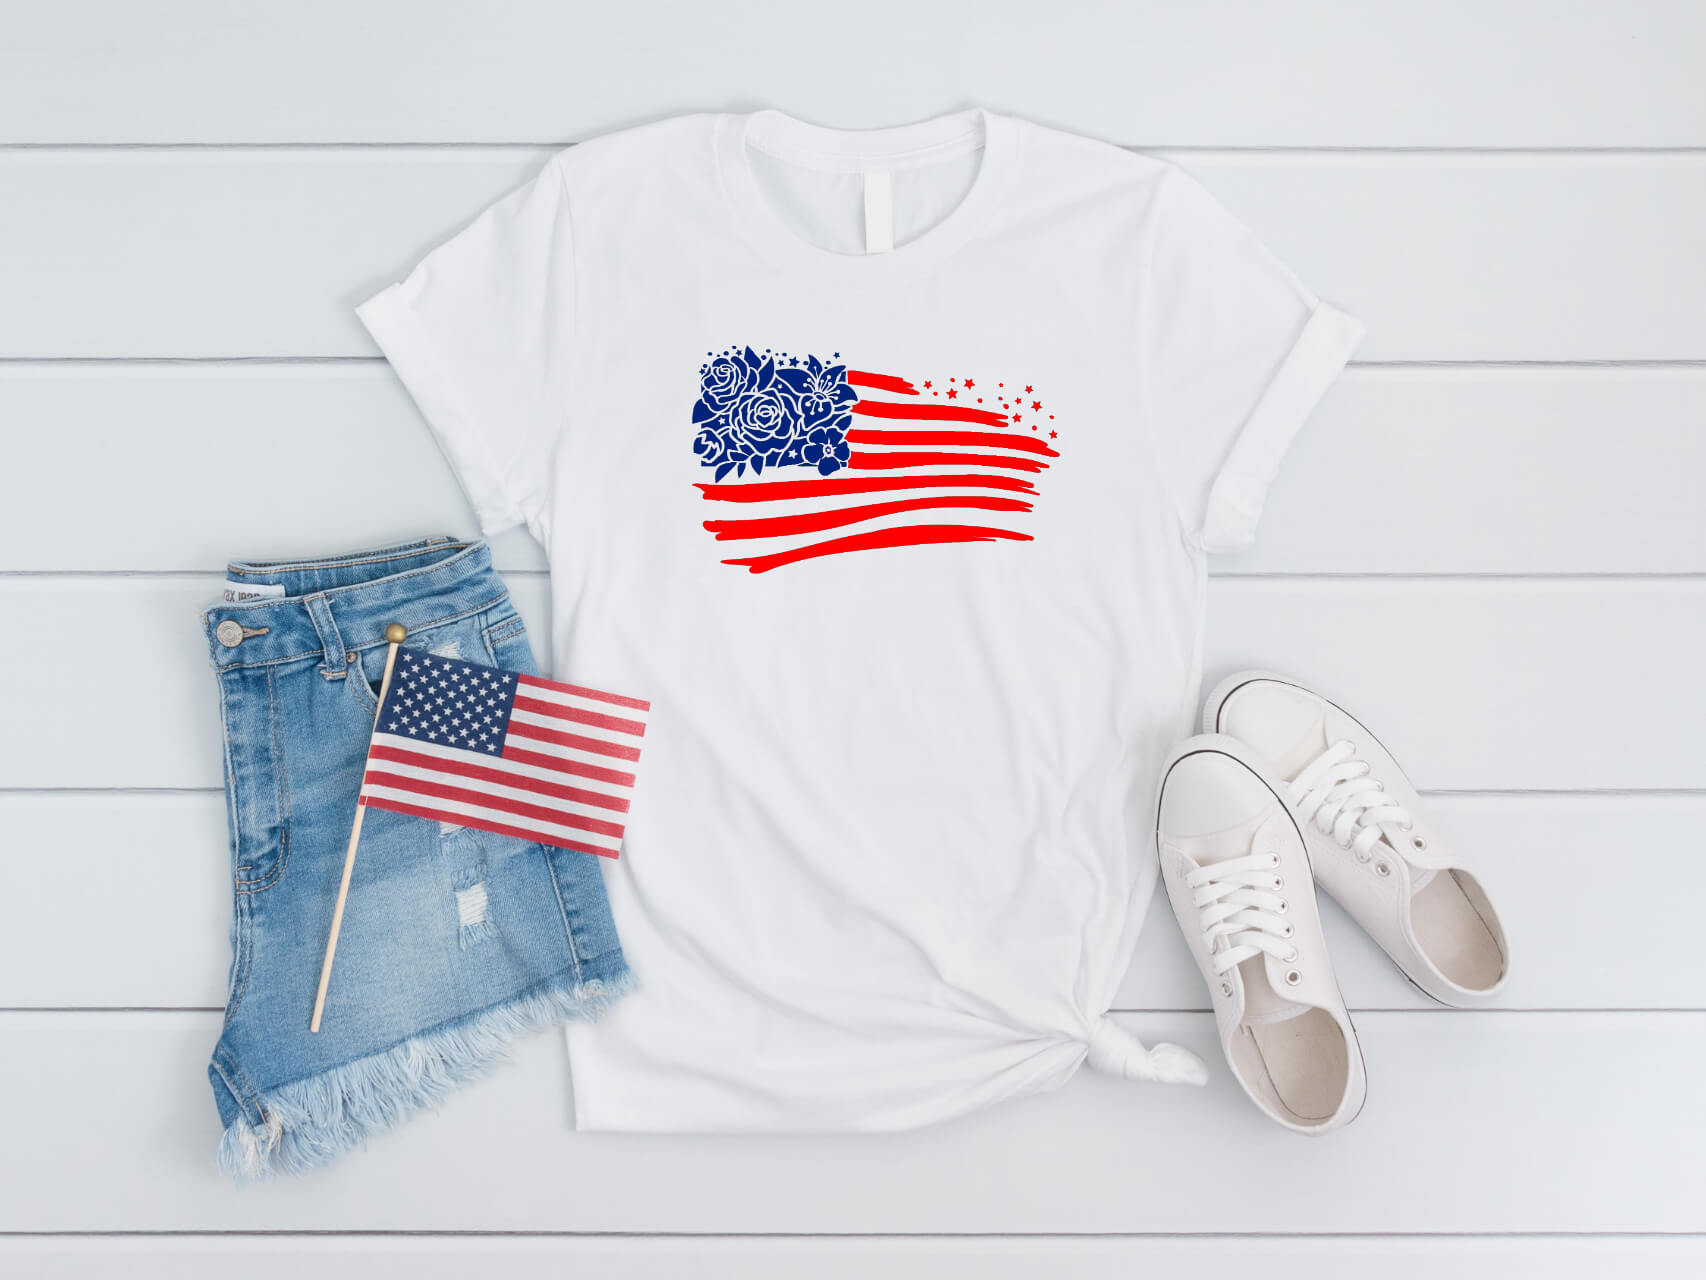 American Flag with Roses Women's Graphic Print T-Shirt / Sweatshirt